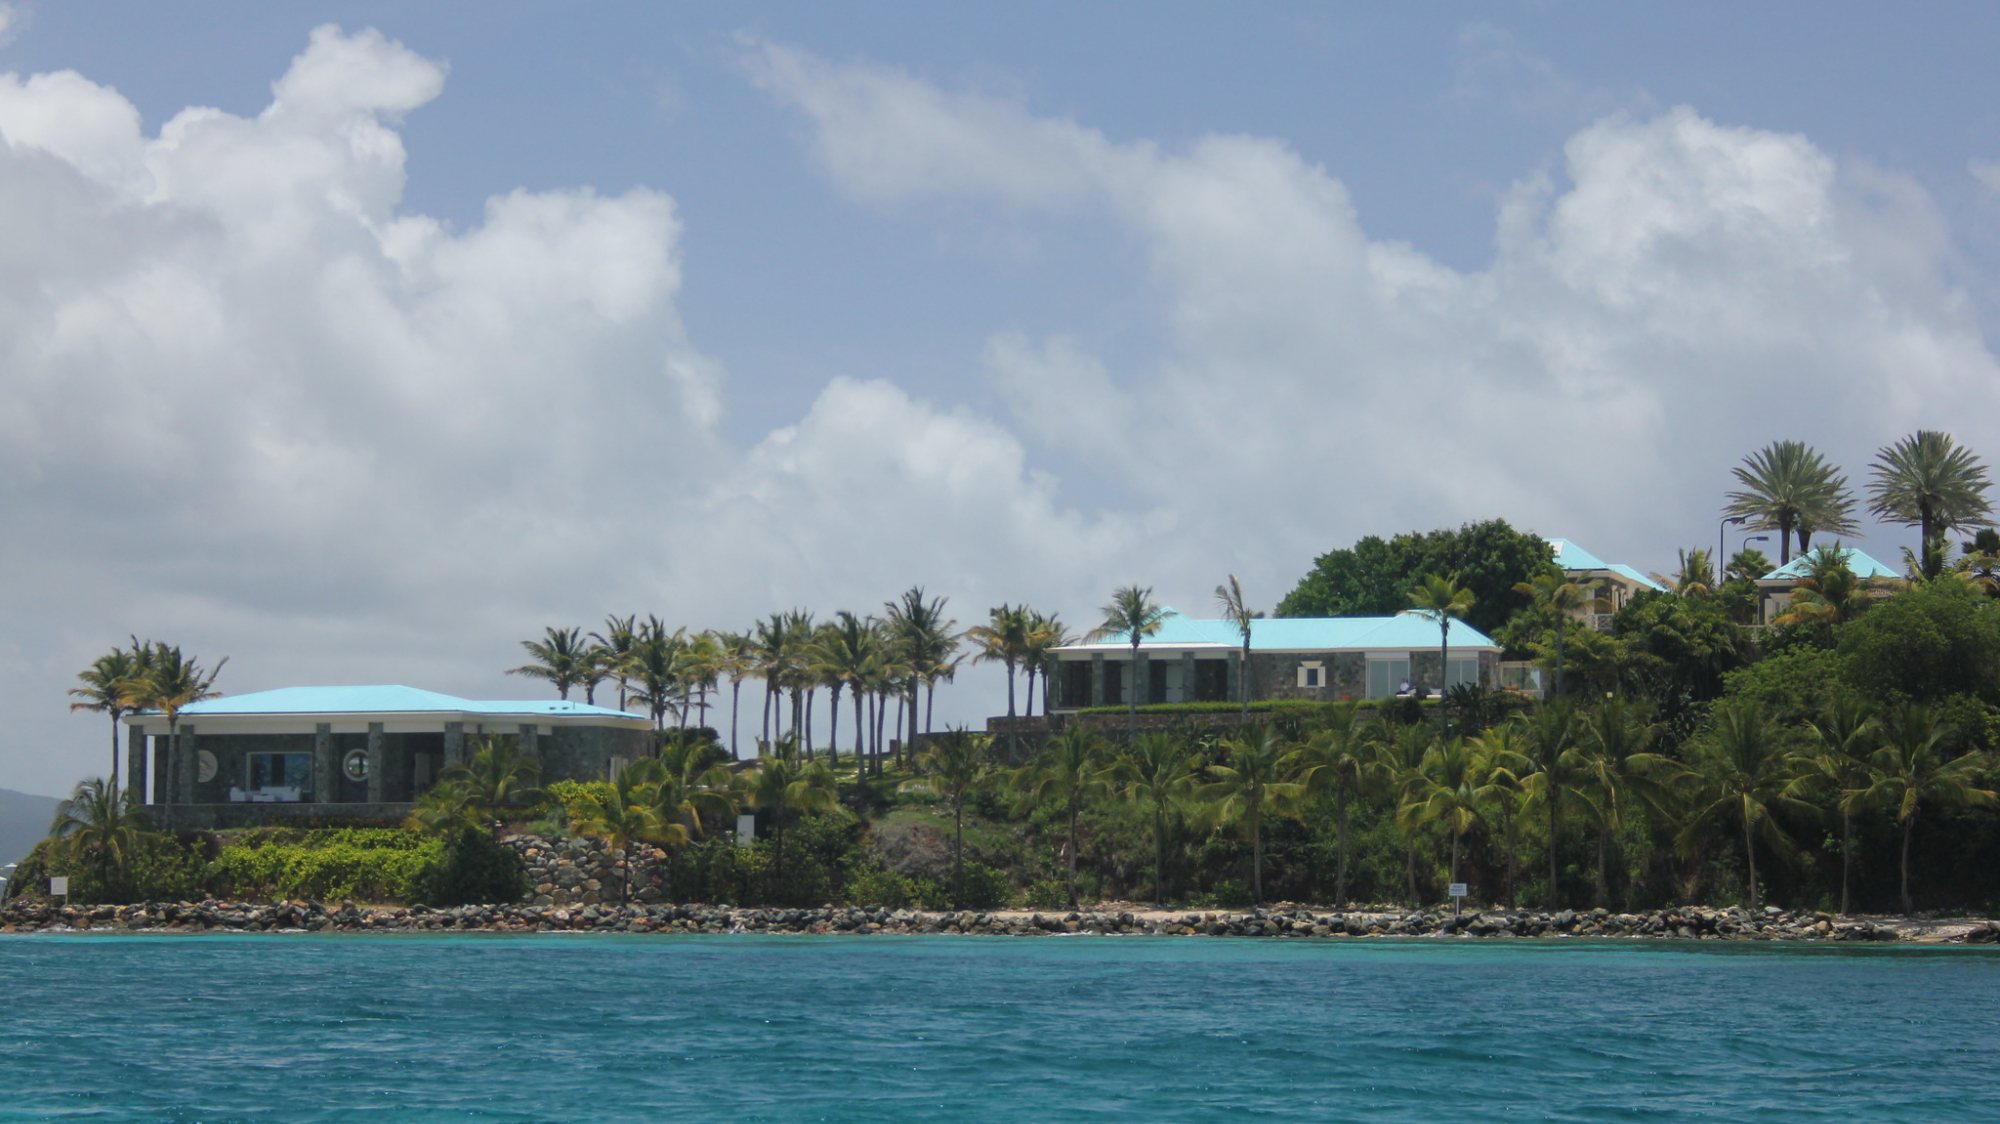 Little St. James, a ilha de Jeffrey Epstein, nas Ilhas Virgens Americanas